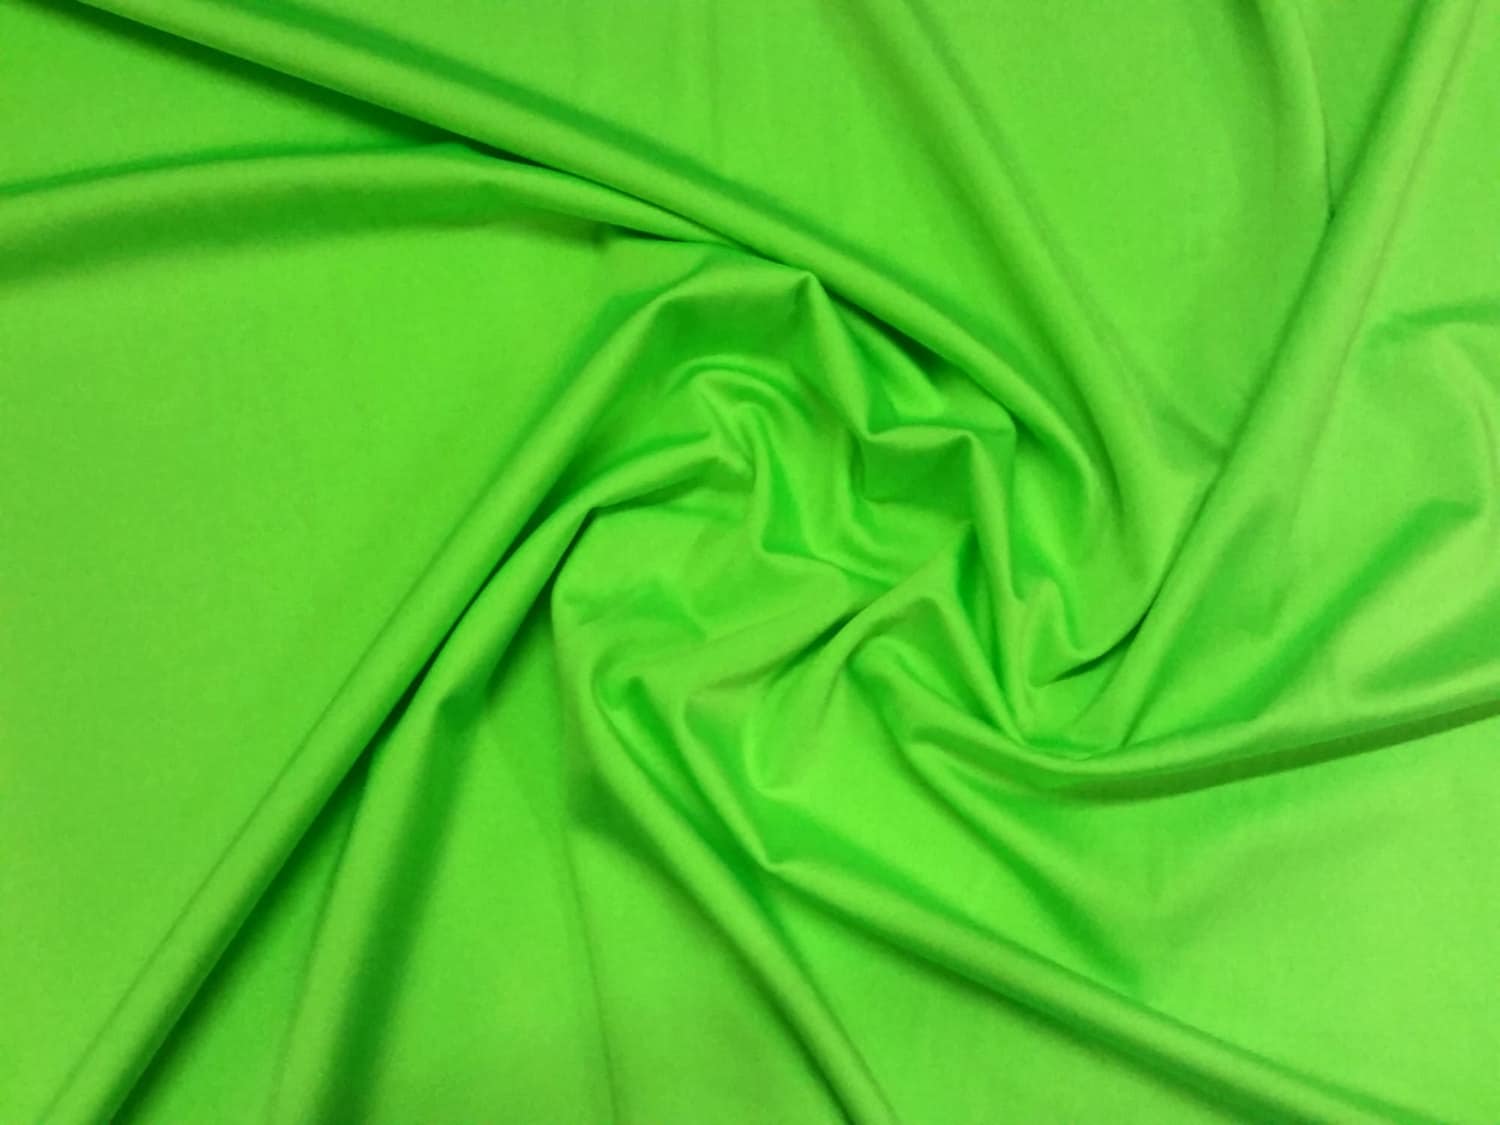 Antique Green Glass Nylon Spandex Swimsuit Fabric